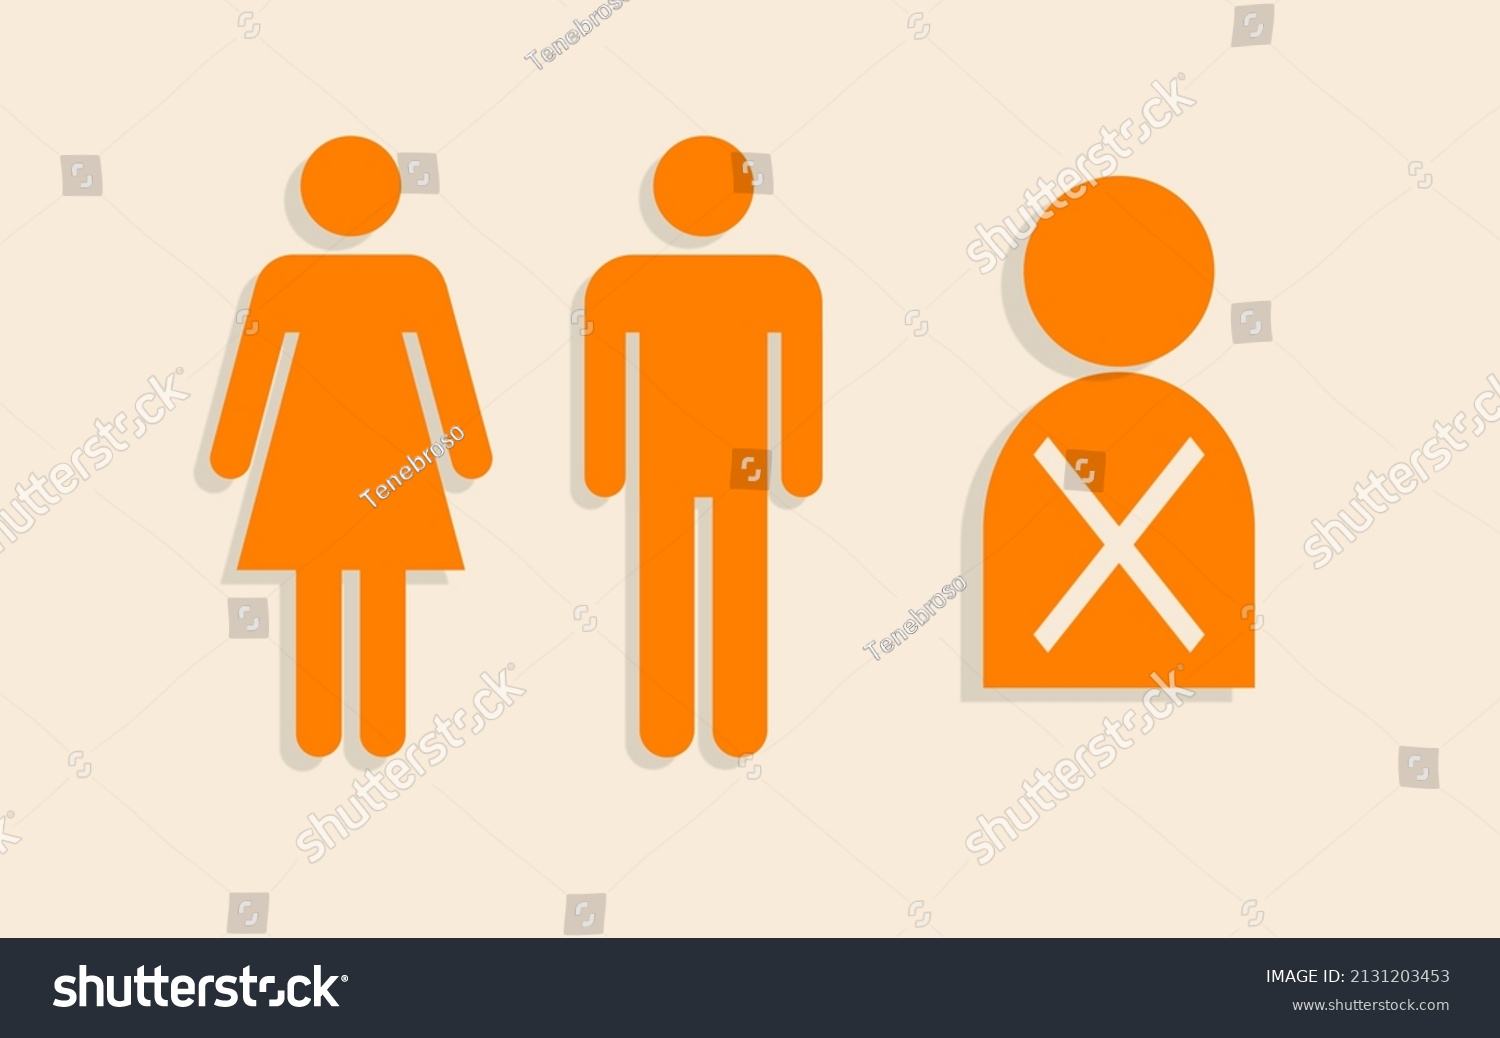 Third Gender Classifications Nonbinary Intersex People Stock Illustration 2131203453 Shutterstock 2925